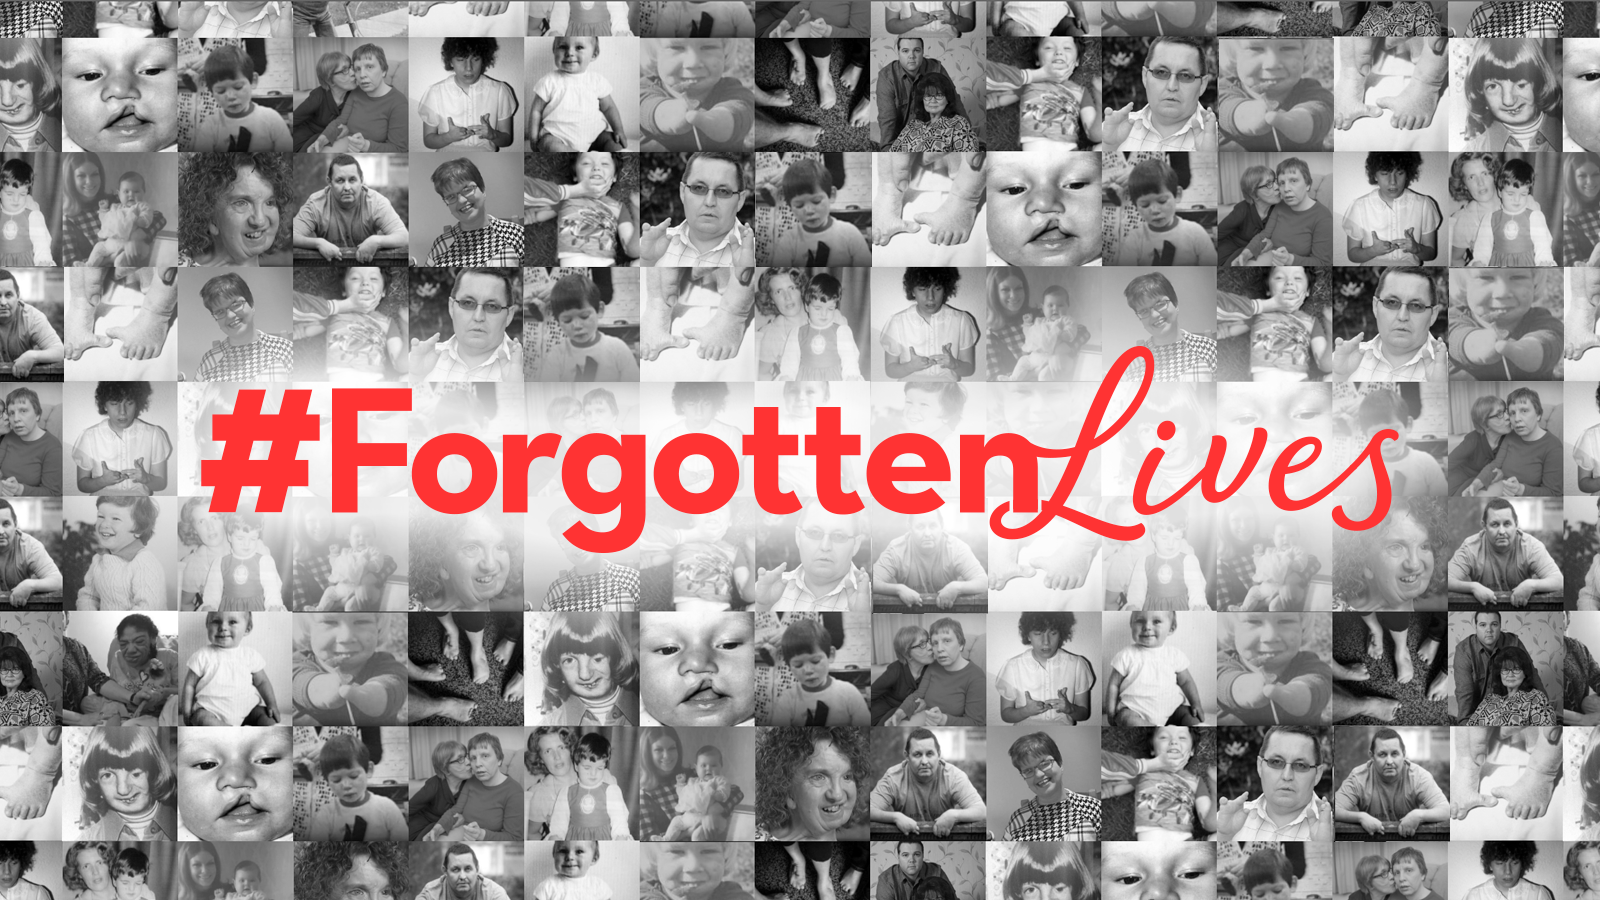 Forgotten lives petition